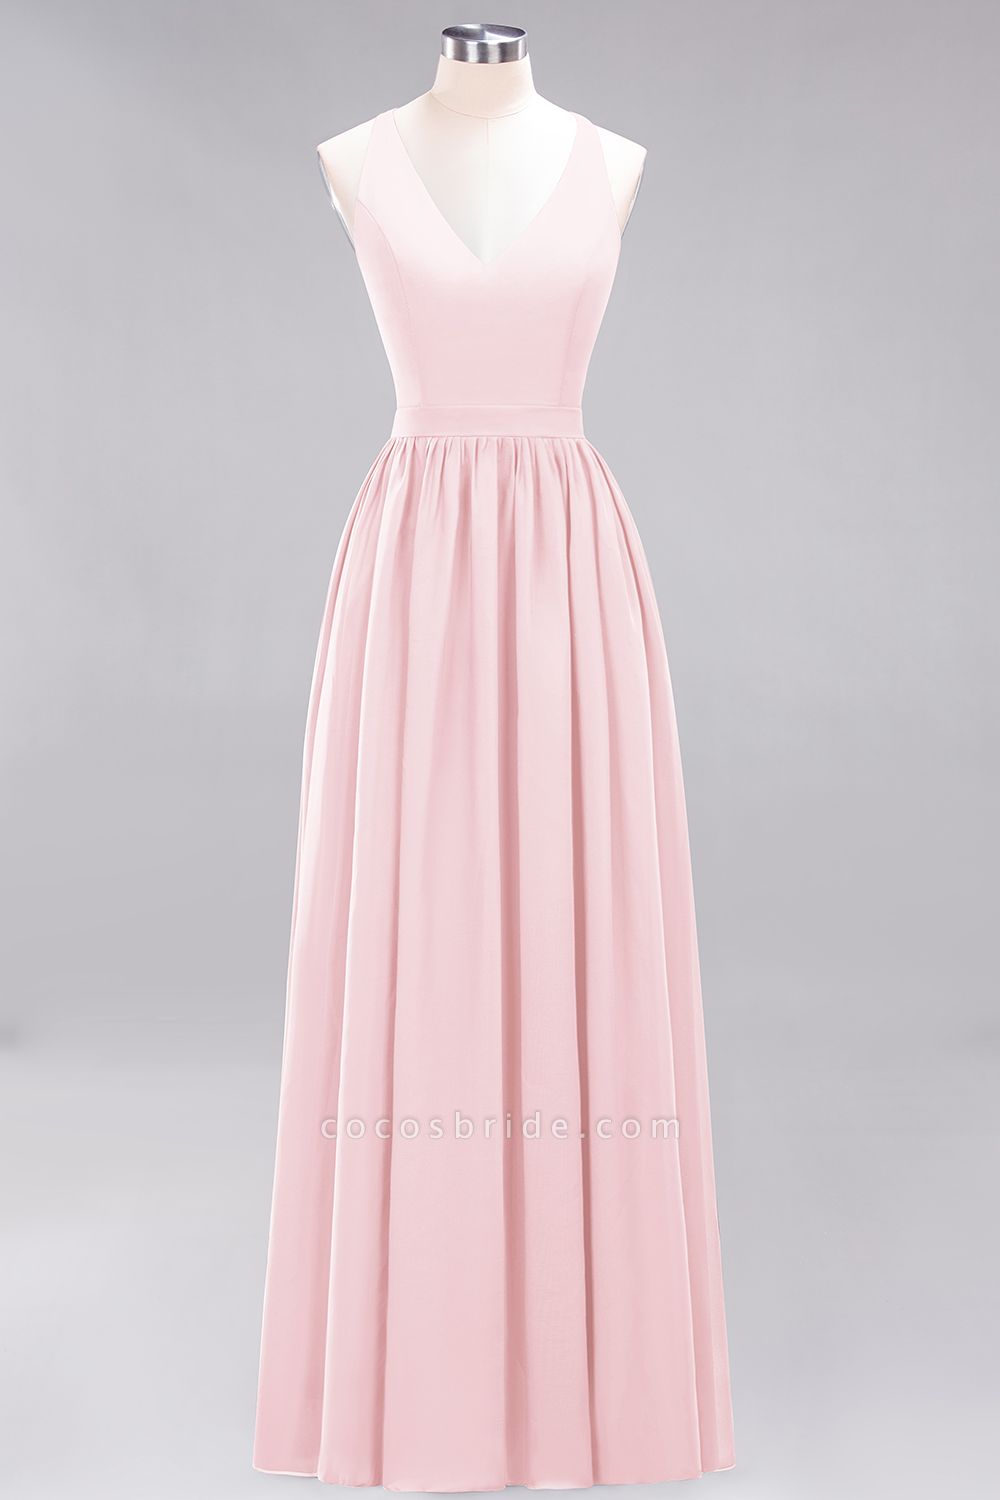 BM0152 Chiffon Lace V-Neck Sleeveless Straps Floor Length Bridesmaid Dress